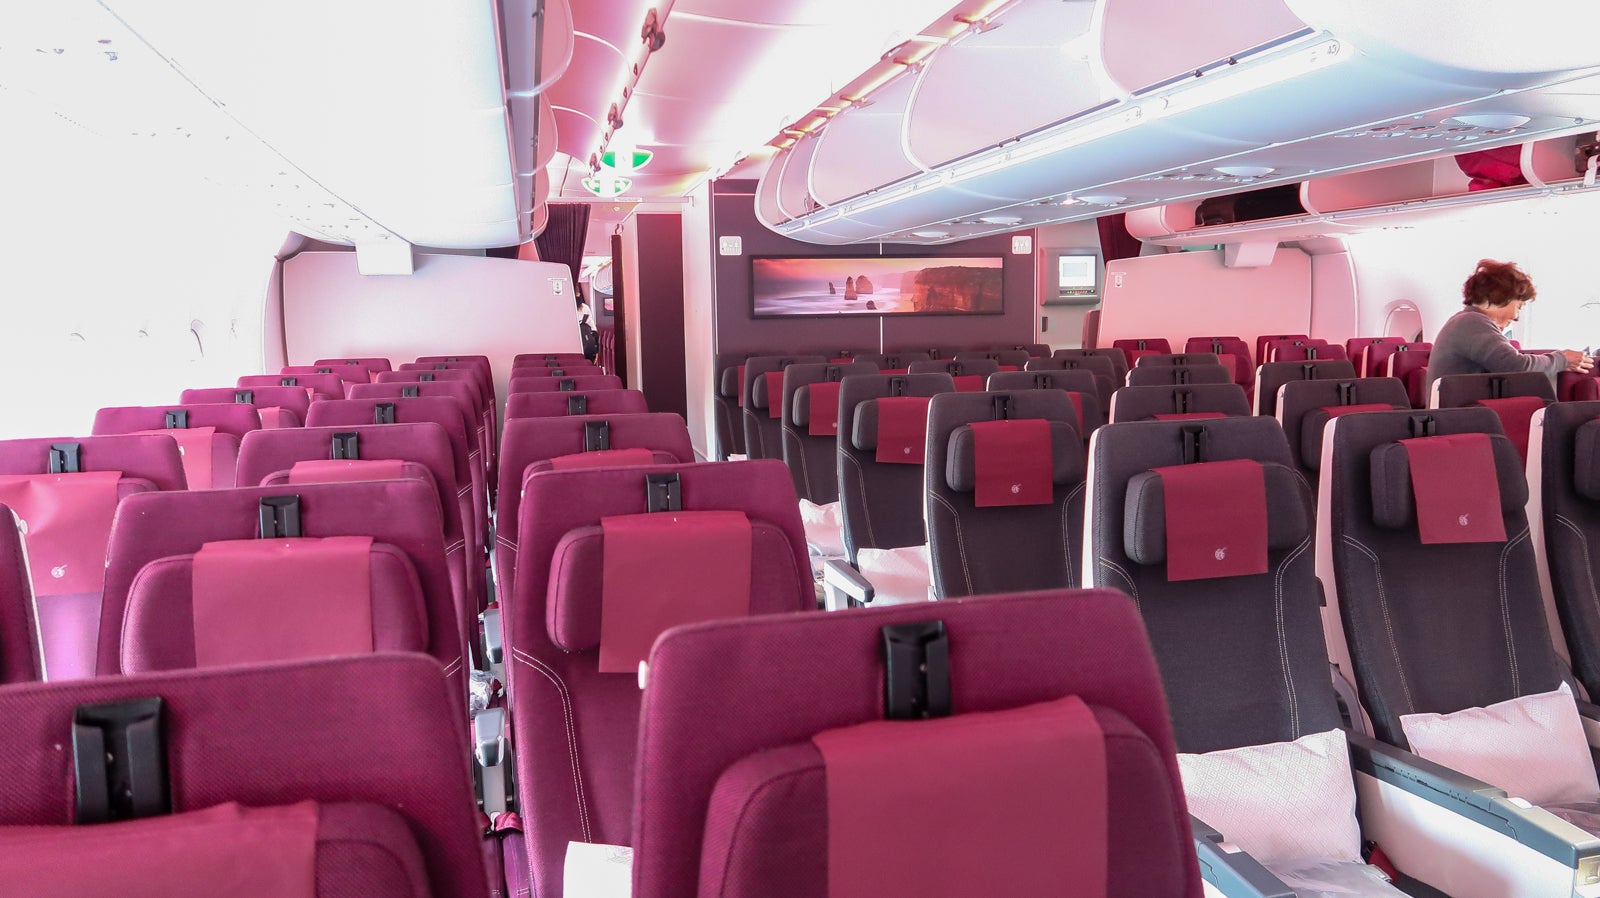 Qatar Airways' carry-on size limits